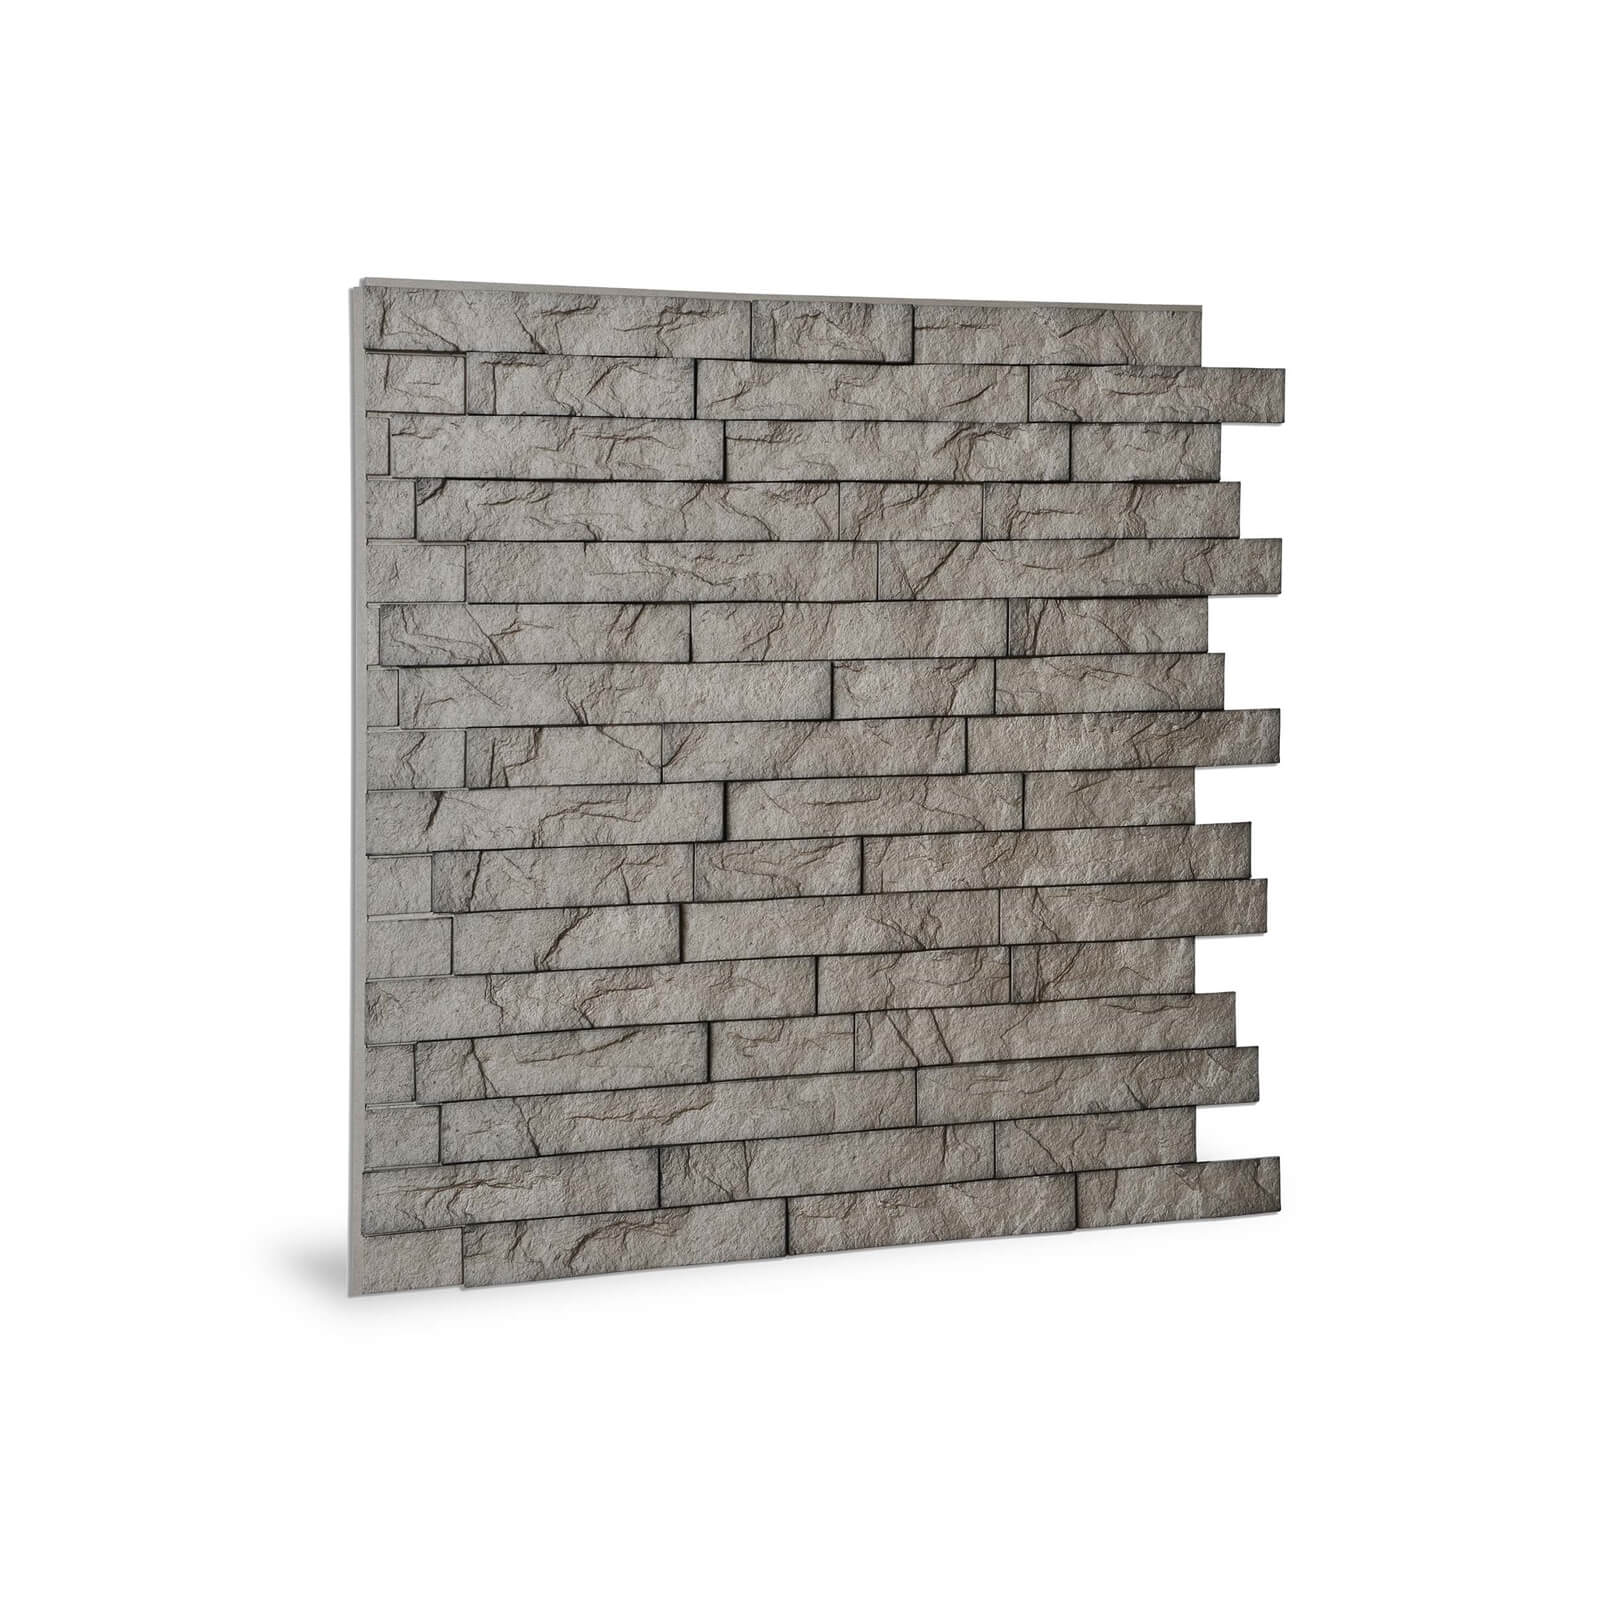 Innovera Decor PVC Seamless 3D Design Cladding Panel (Ledge Stone - Portland Cement, Set of 6)